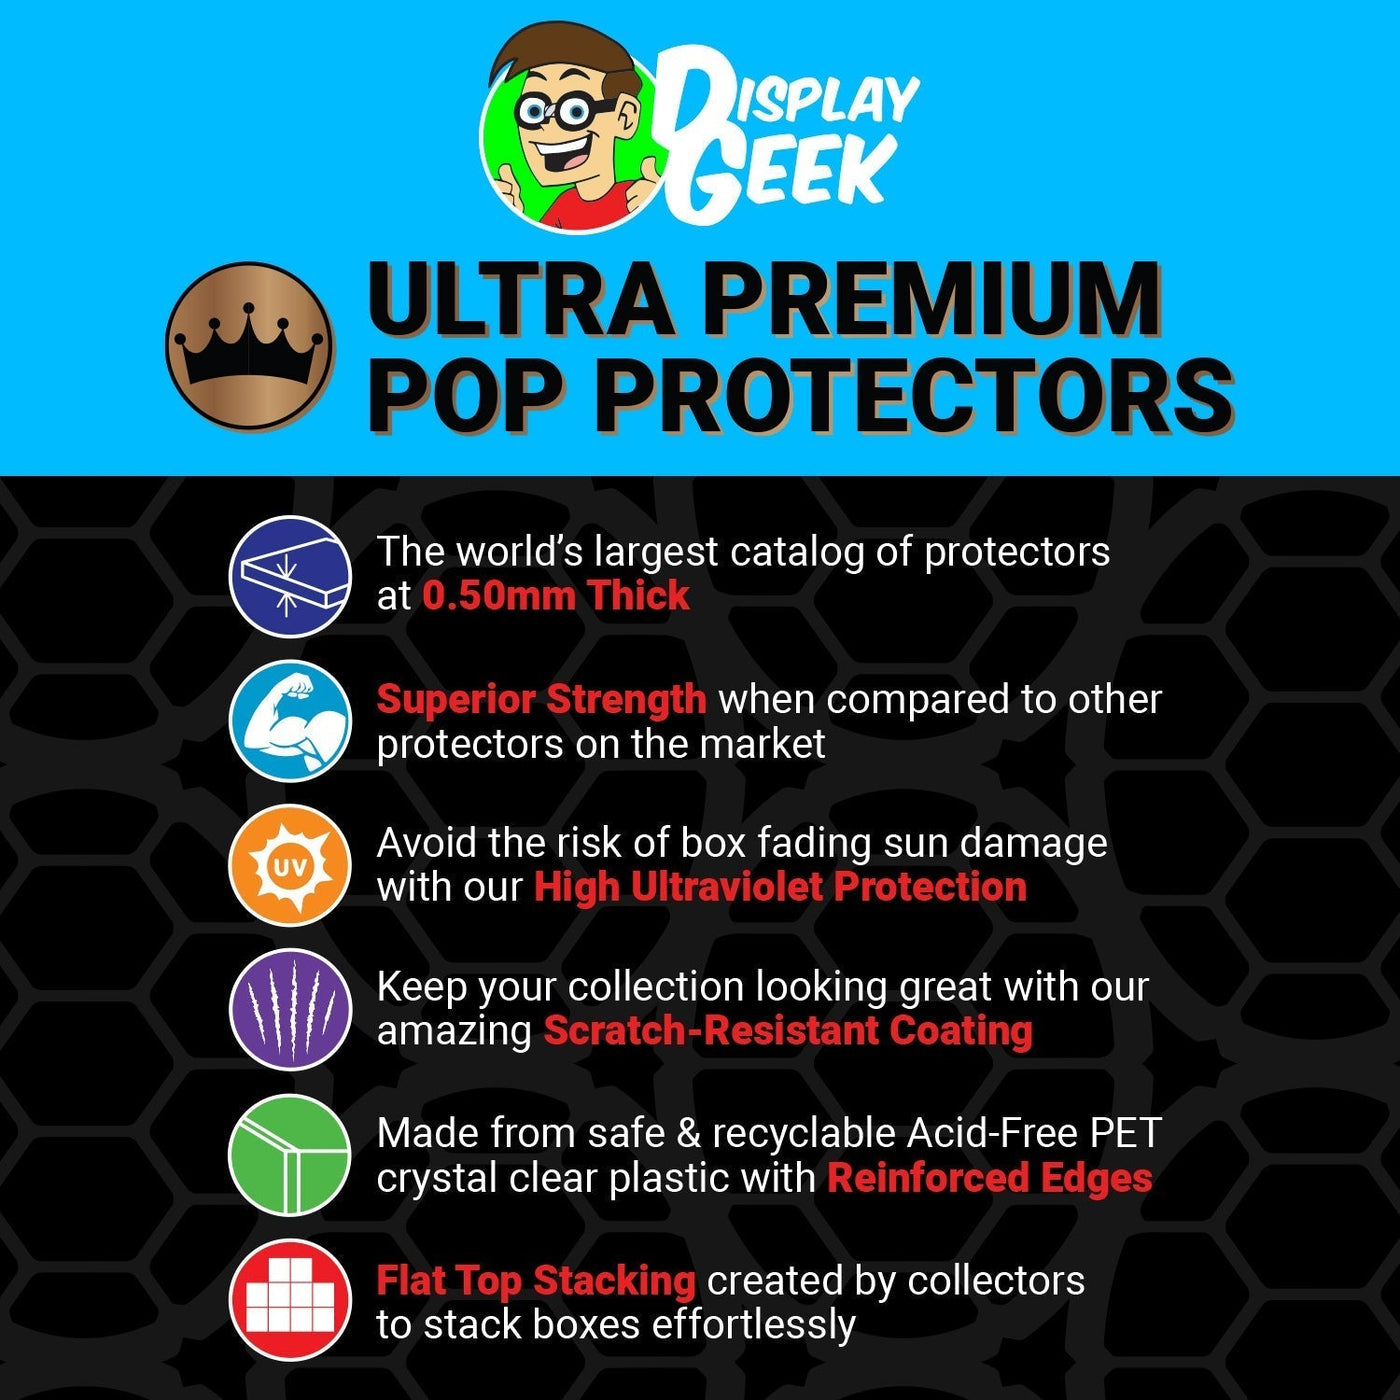 Pop Protector for 3 Pack Br'er Rabbit, Br'er Fox & Br'er Bear Funko Pop on The Protector Guide App by Display Geek